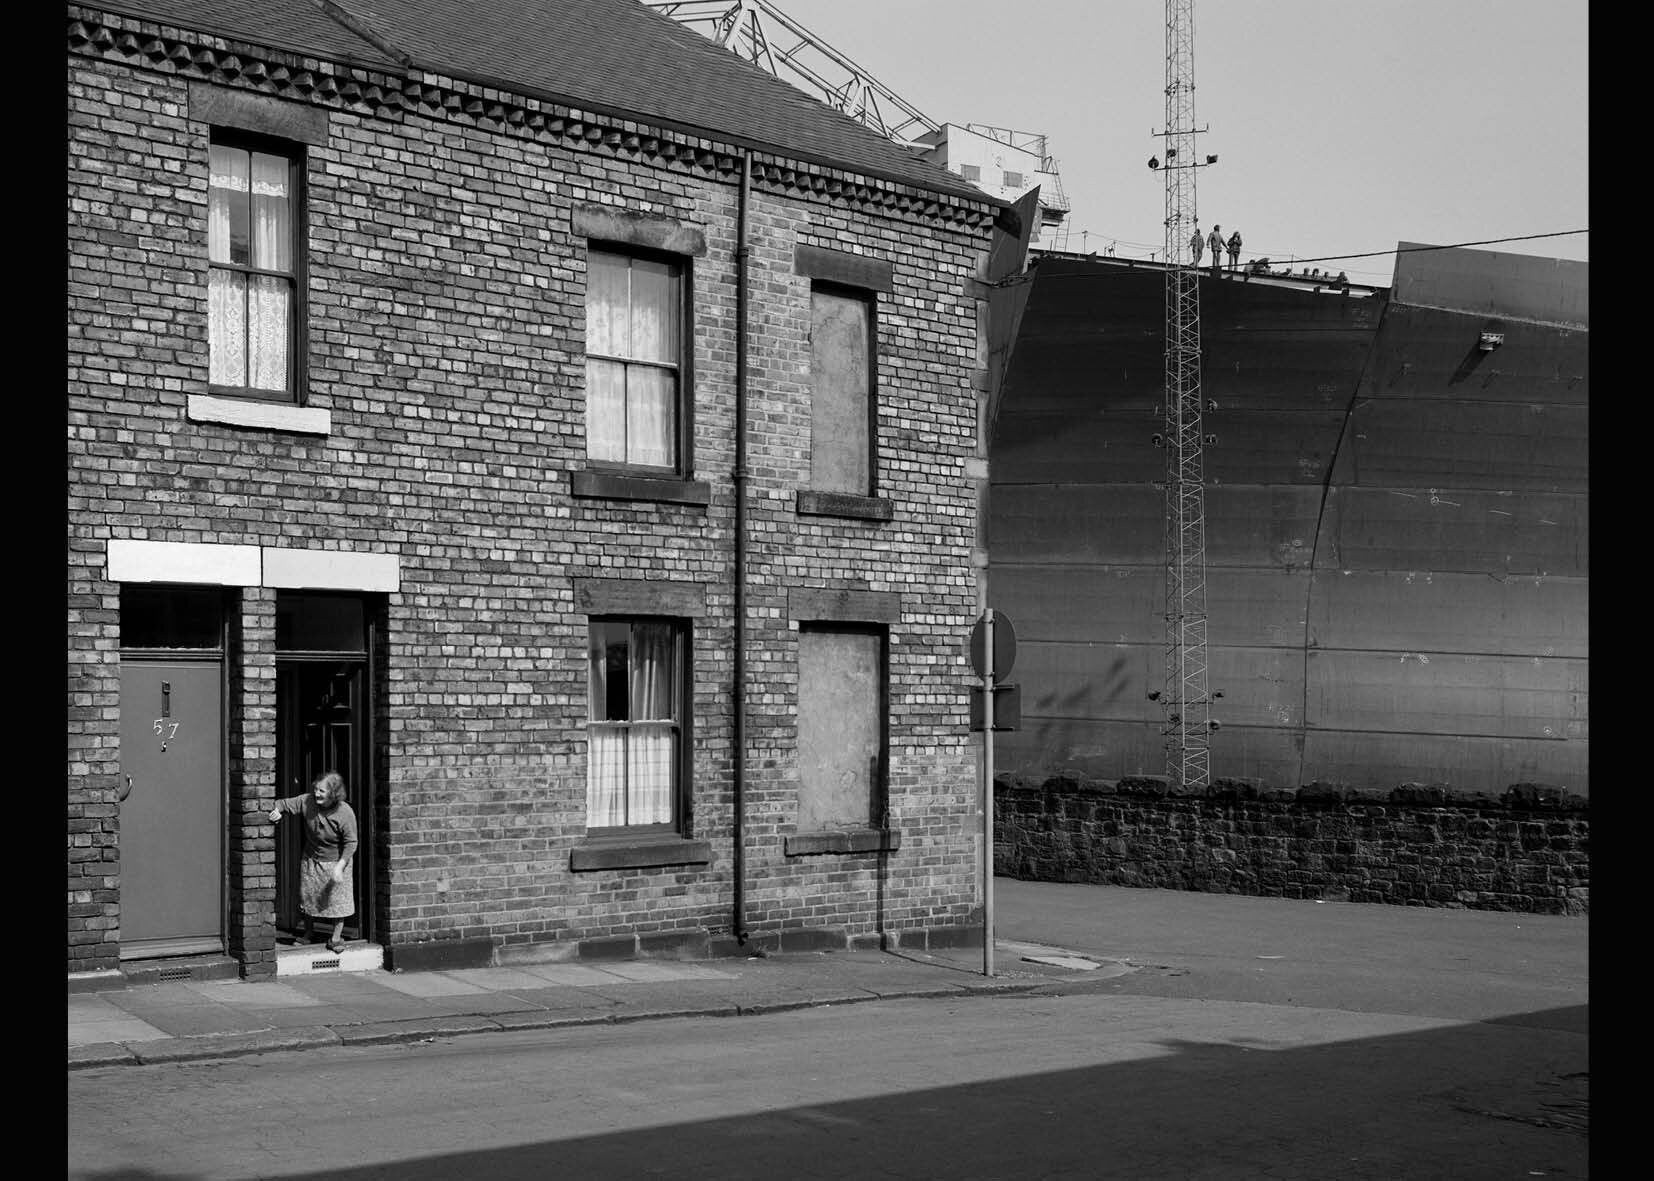 Chris Killip — Shipbuilding on Tyneside 1975-1976